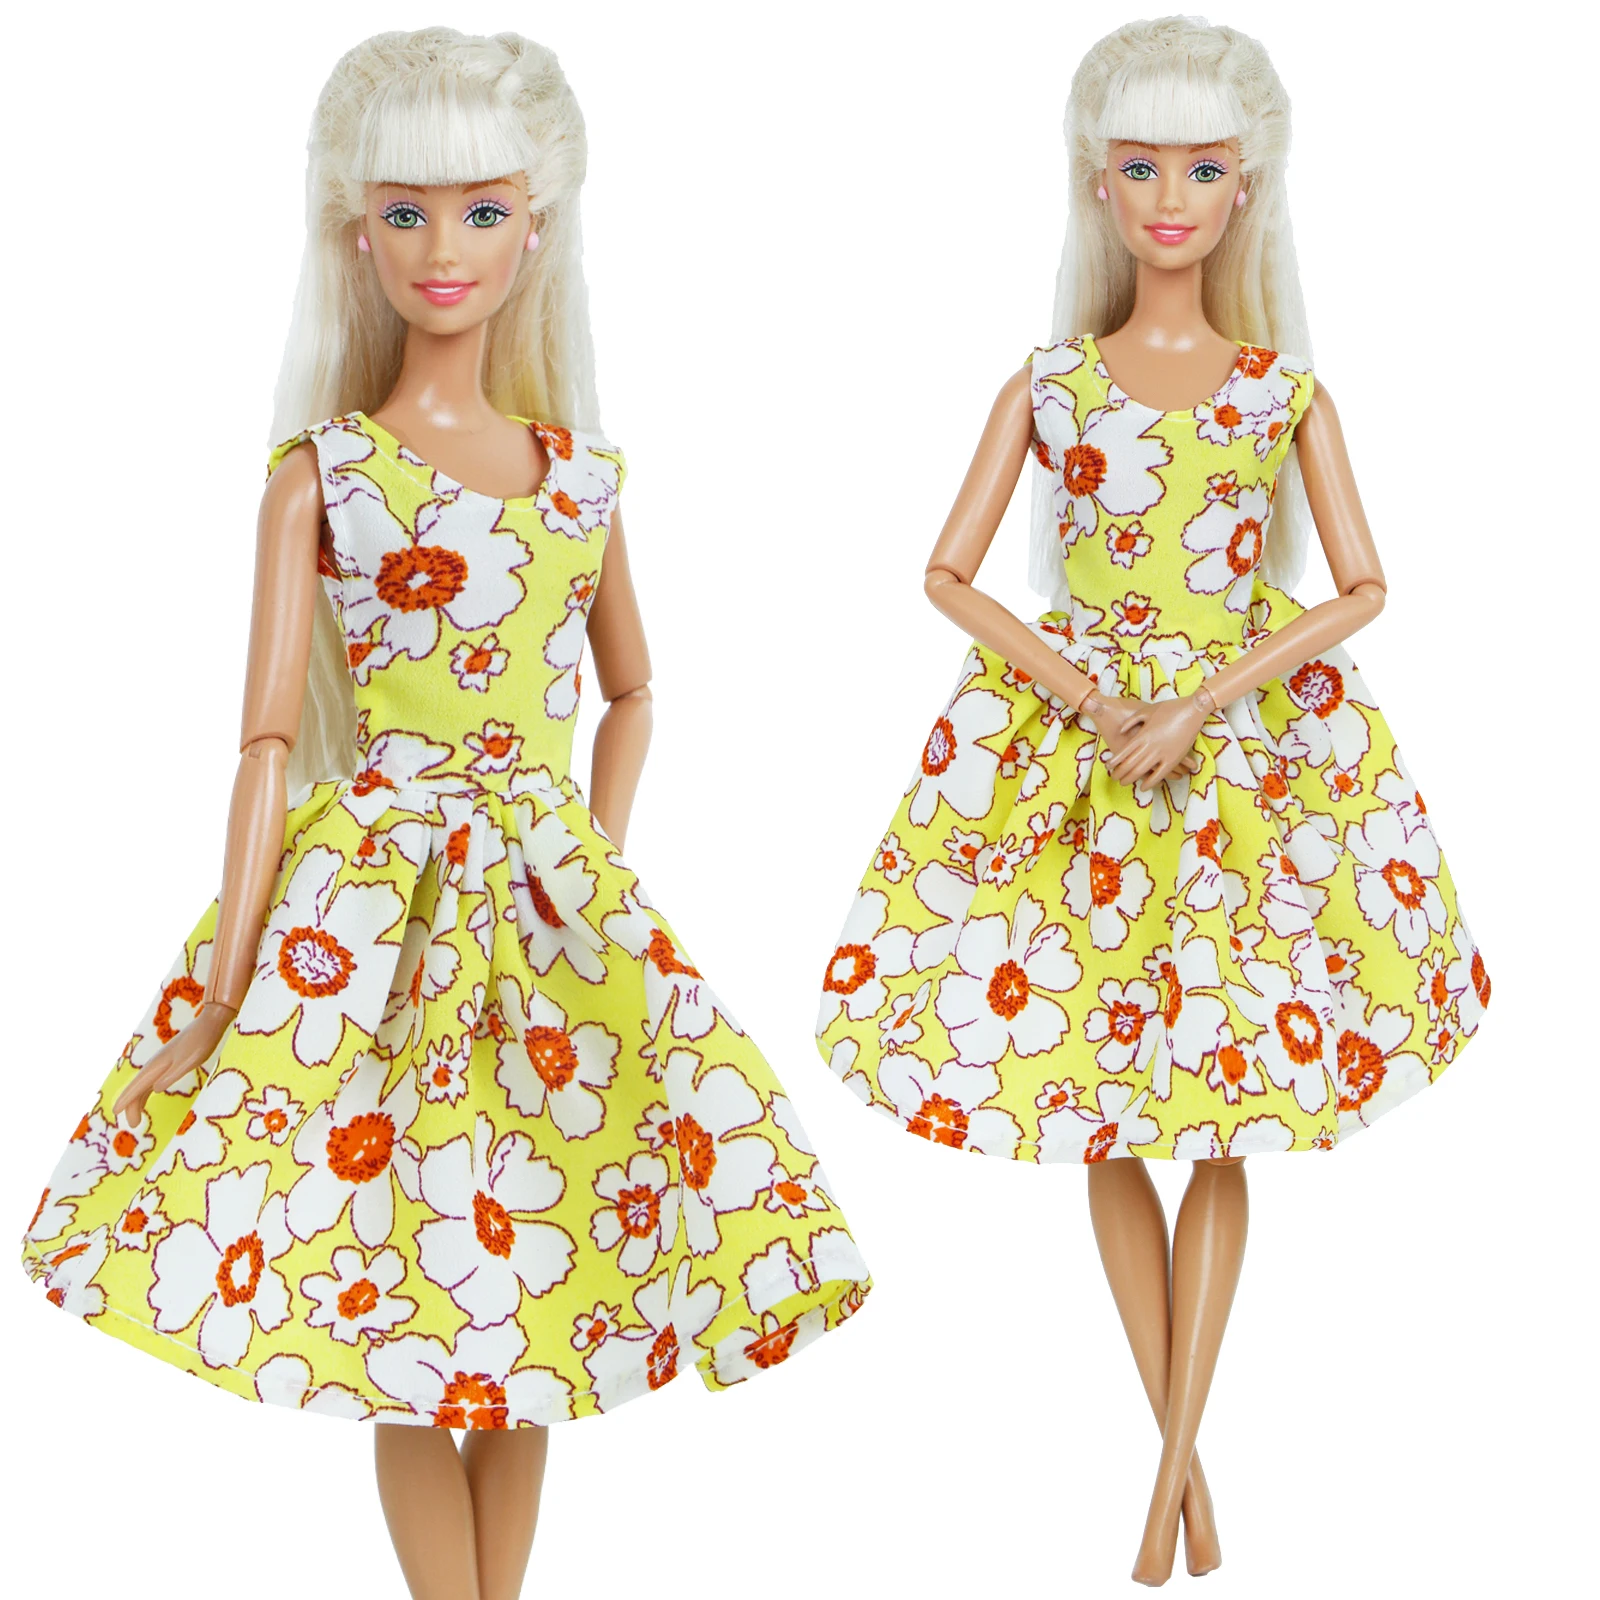 Handmade Fashion Doll Dress Daily Party Wear Yellow Flower Pattern Mini ...